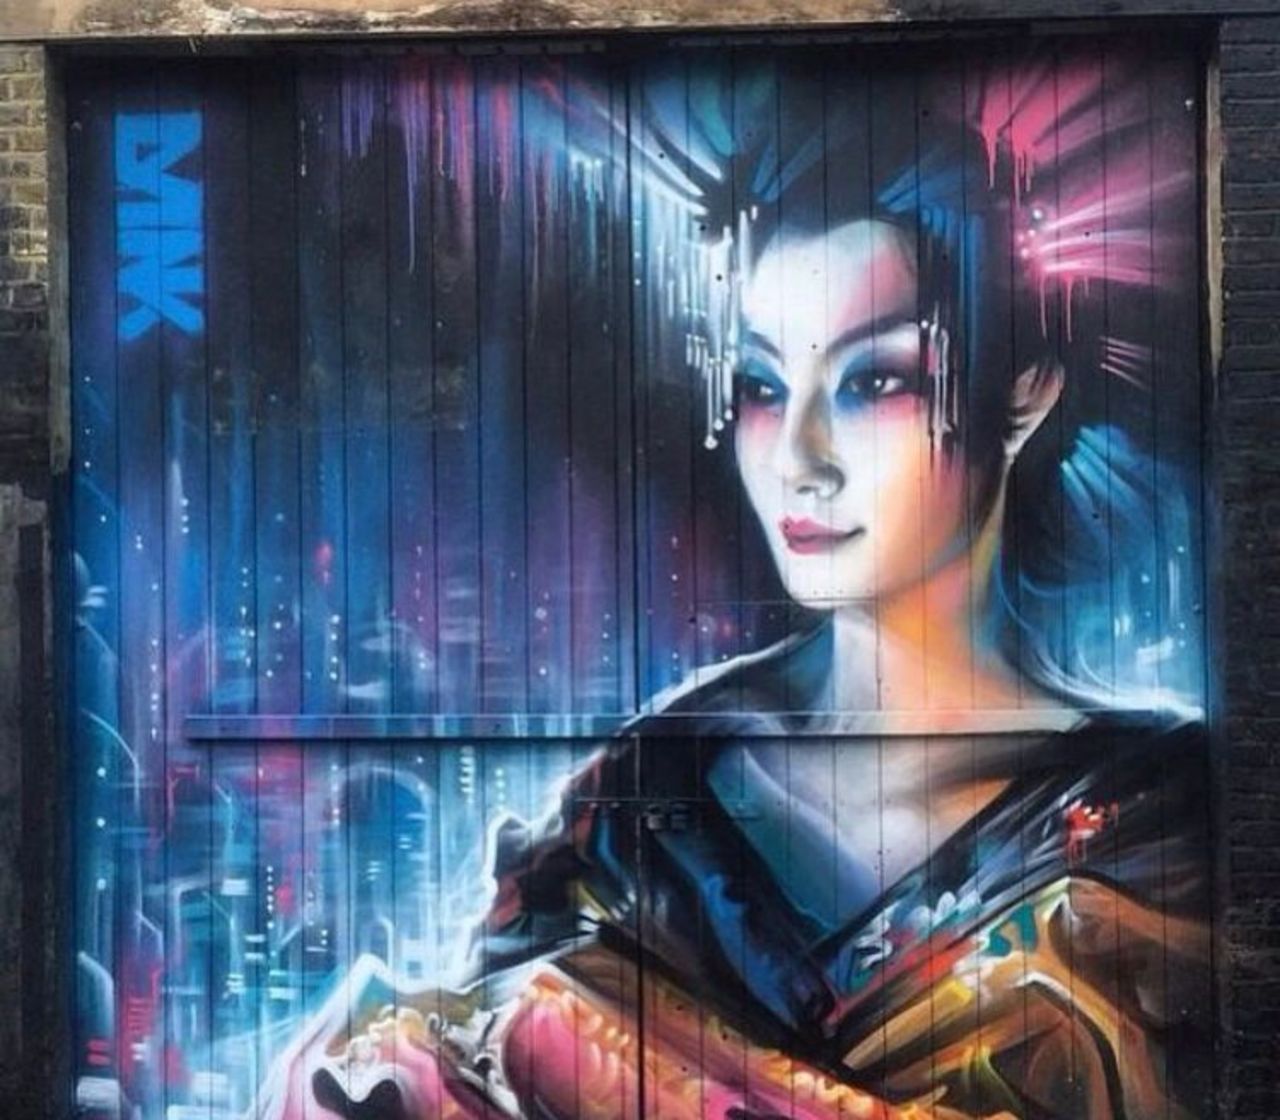 New work by Dan Kitchener #streetart #mural #graffiti #art https://t.co/Aa66Bc8AoZ